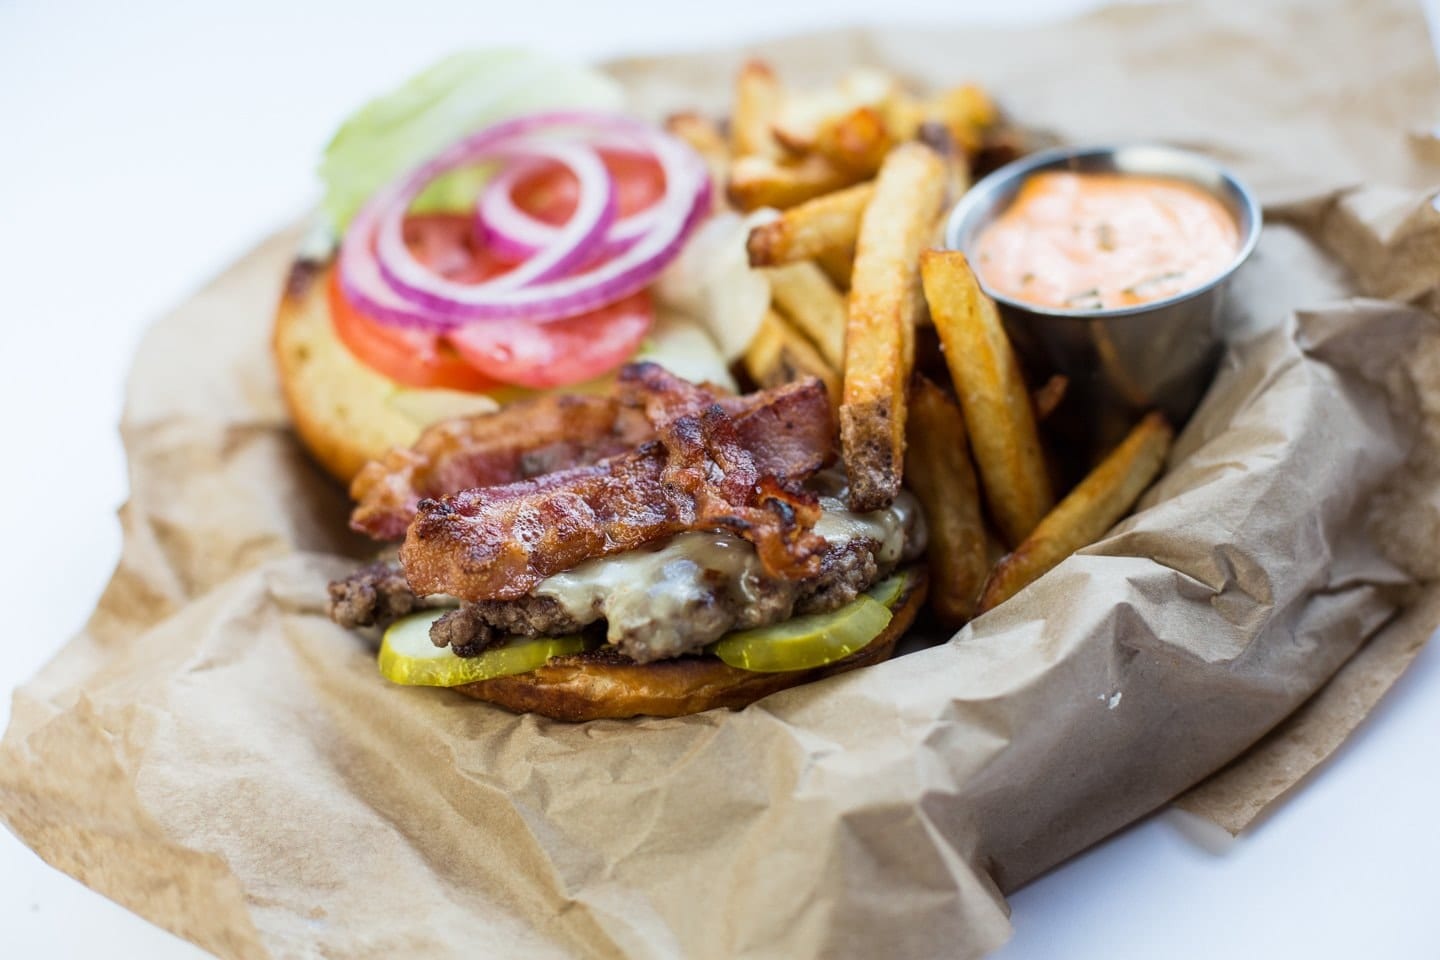 An Empire Burger, a top choice for locals in Breckenridge